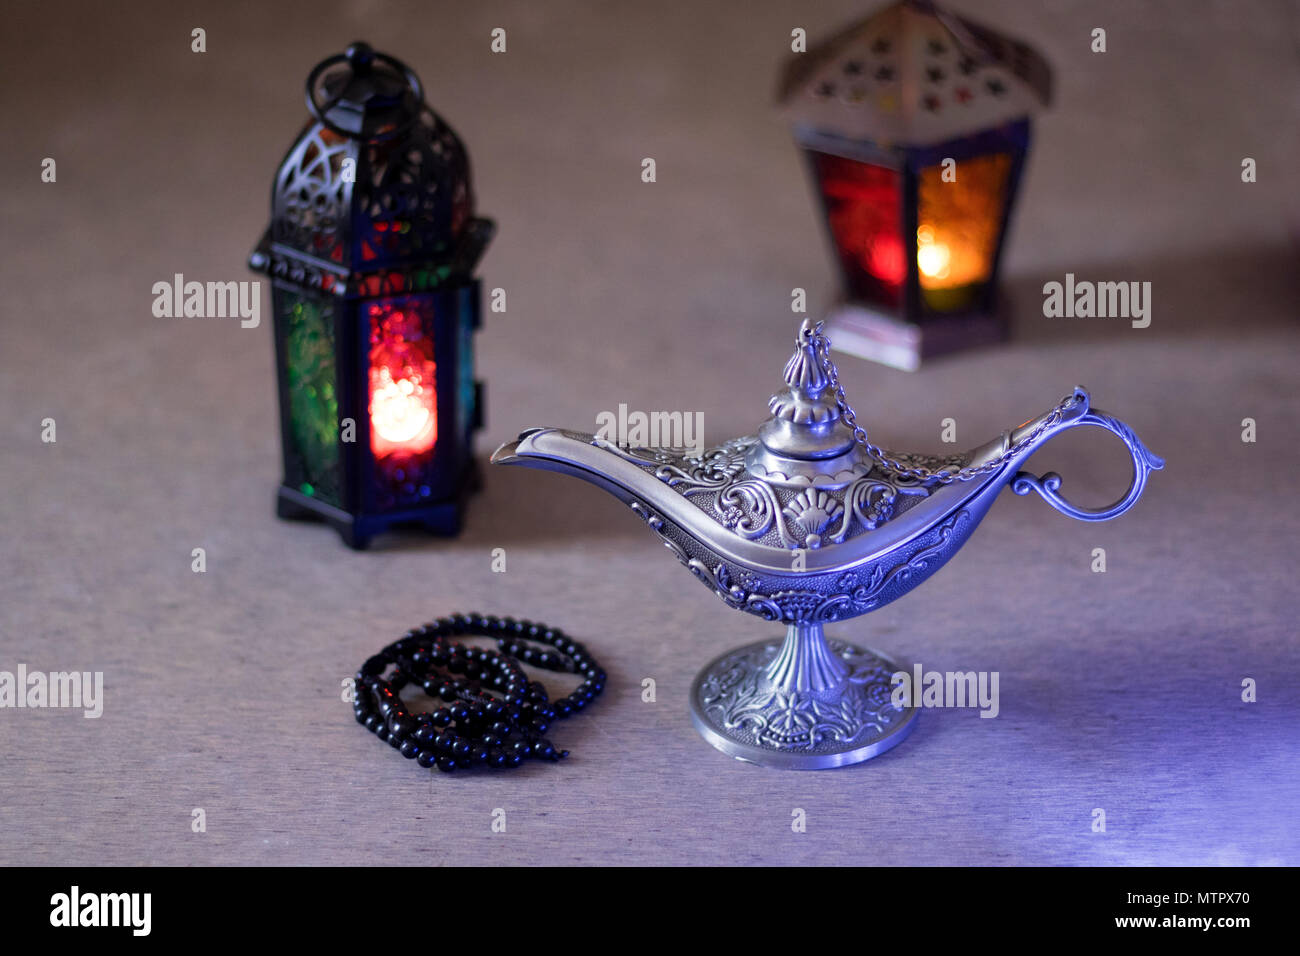 Lanterns and Ancient Egypt aladdin lamp for Ramadan Kareem /Eid al-Fitr Mubarak Stock Photo